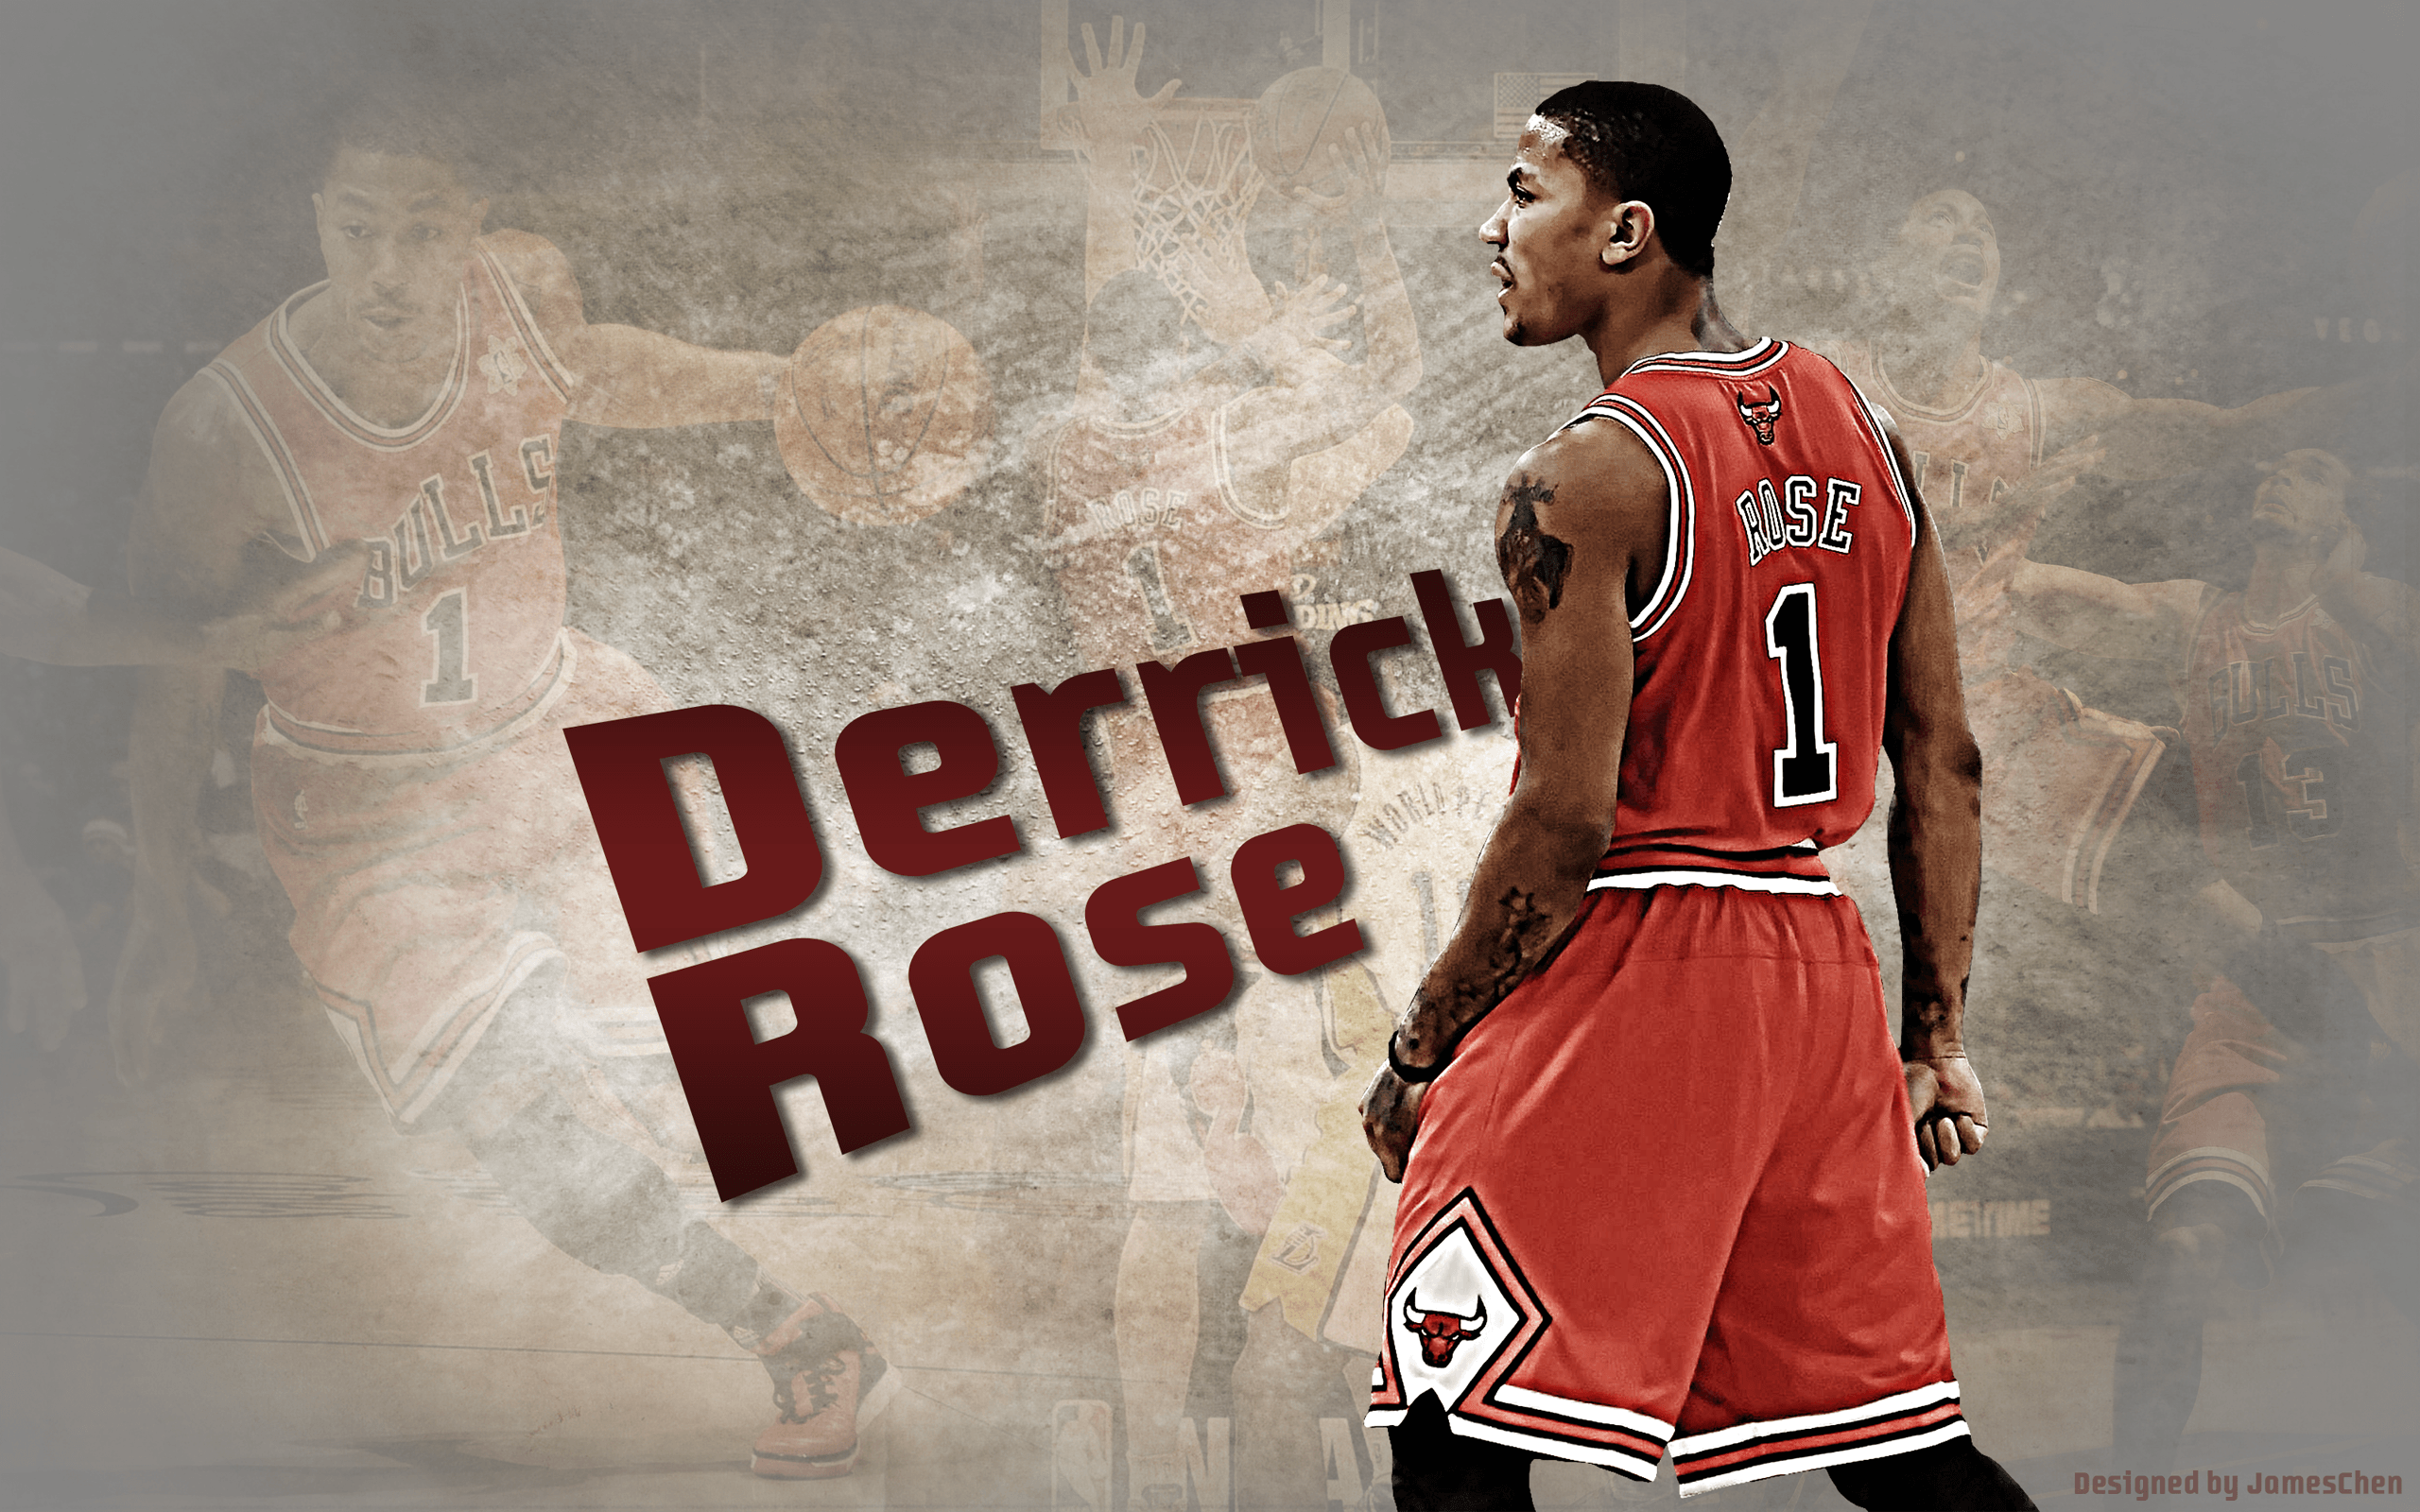 Derrick Rose Wallpaper 2015 HD Wallpaper, Background Image